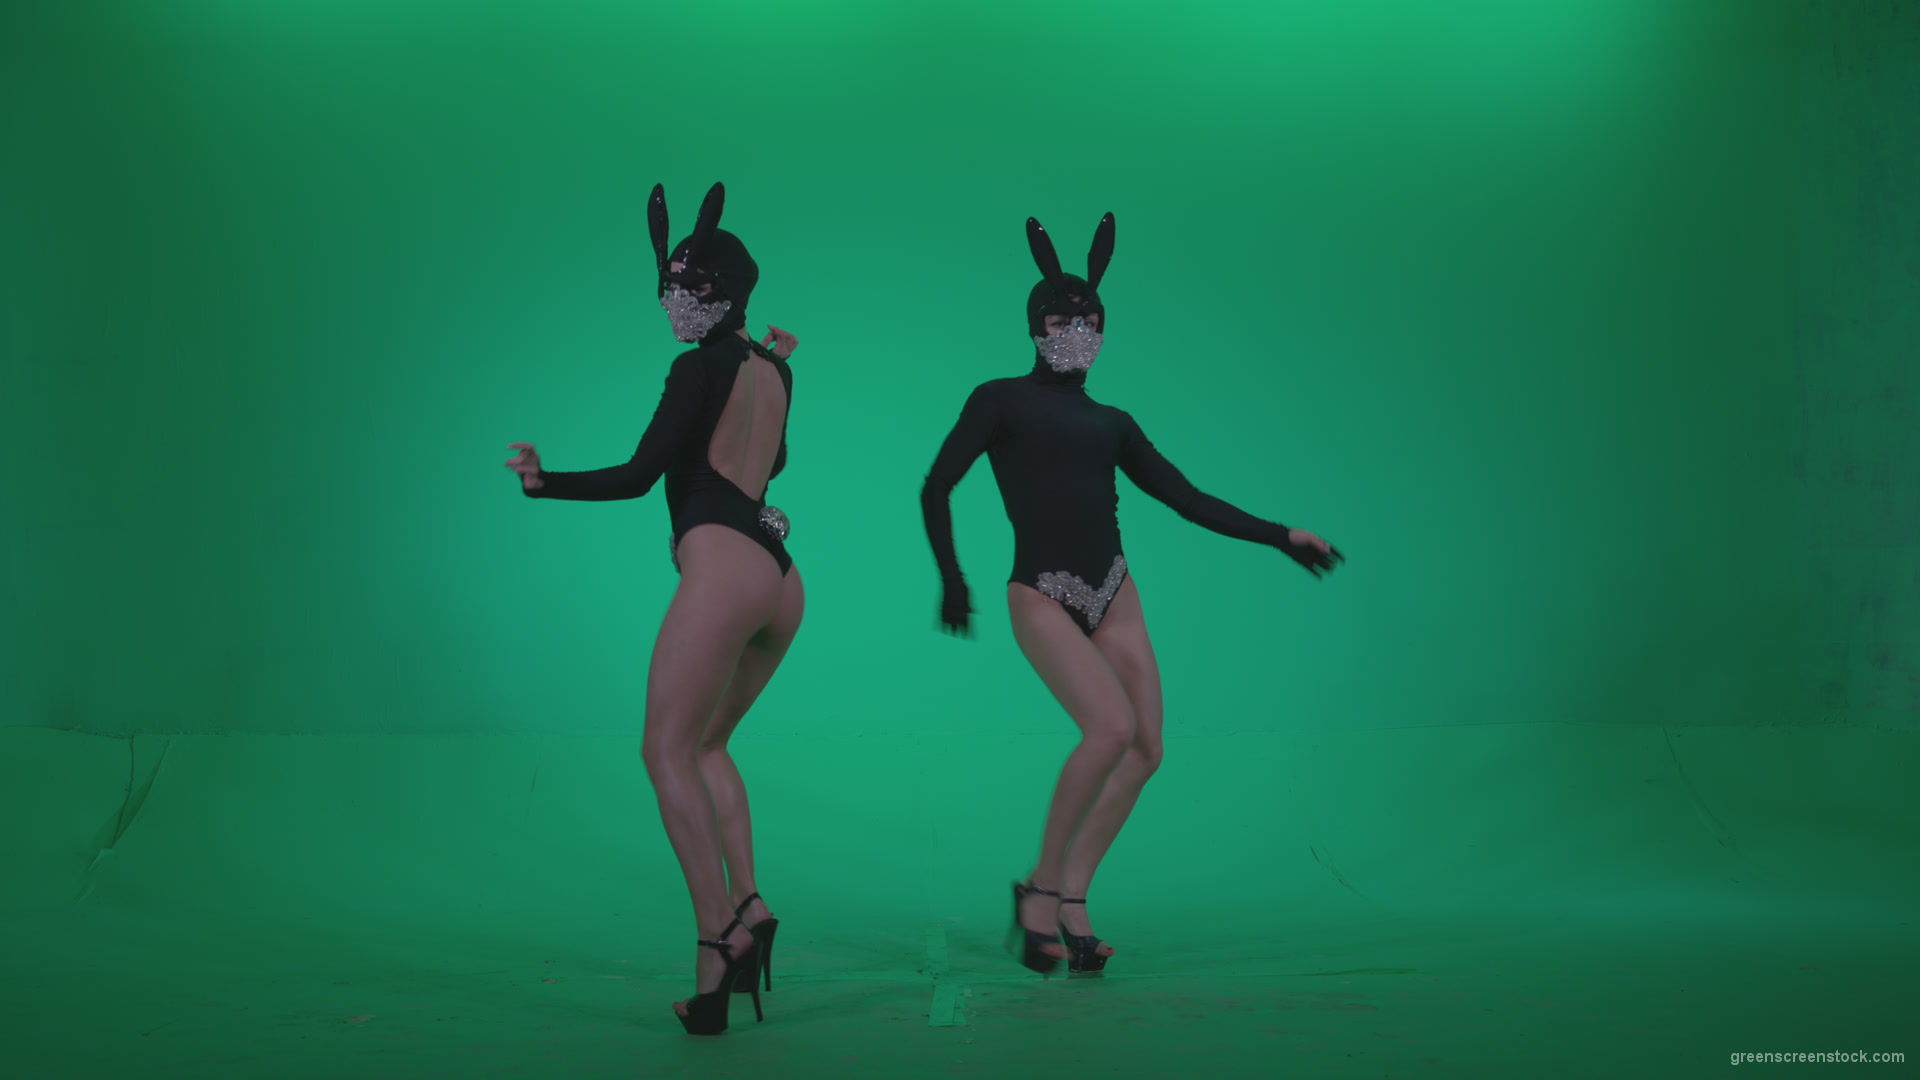 Go-go-Dancer-Black-Rabbit-u1-Green-Screen-Video-Footage_007 Green Screen Stock